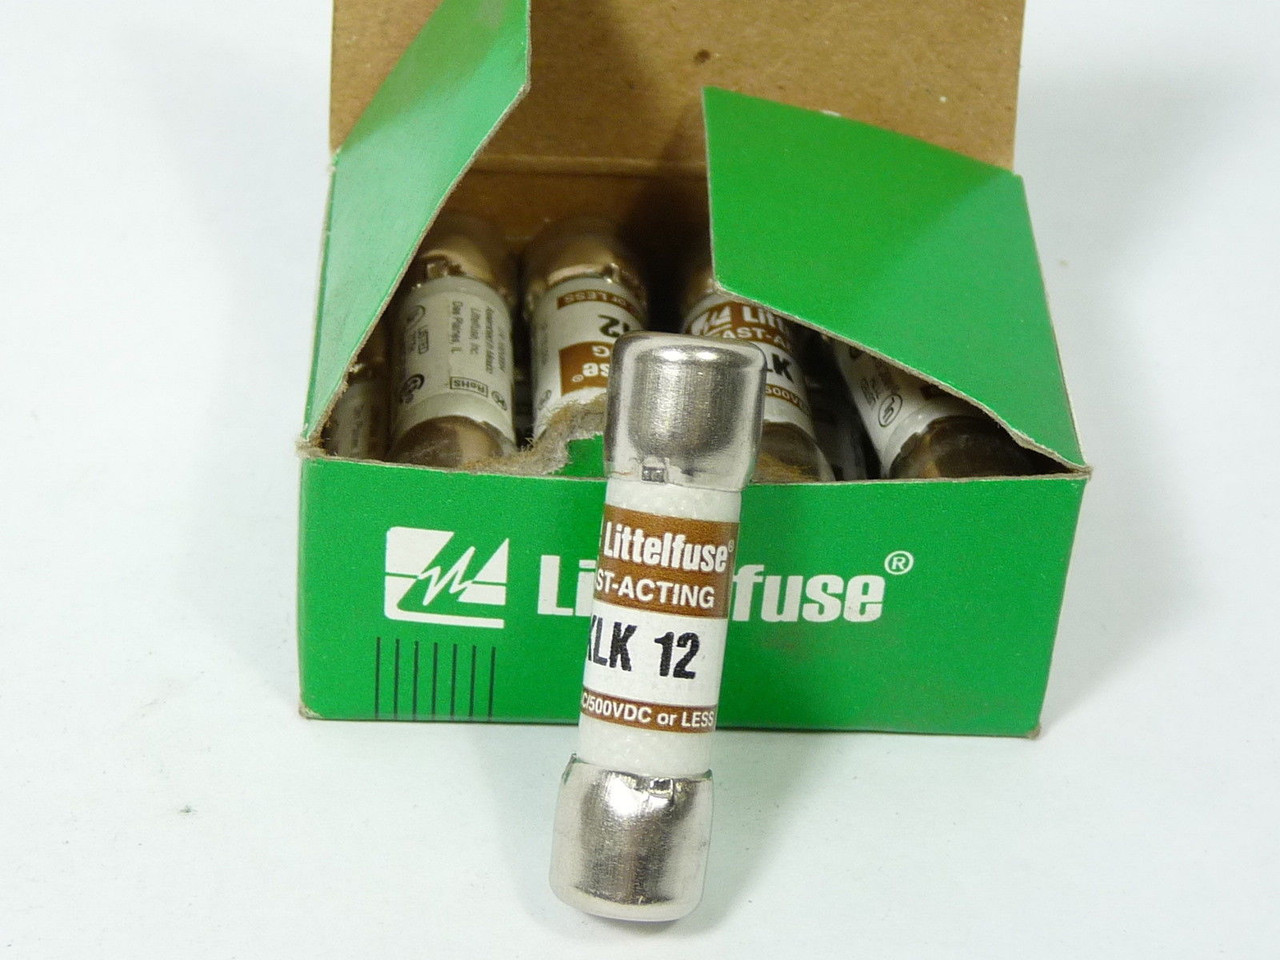 Littelfuse KLK-12 Fast Acting Fuse 1/2A 600V 10-Pack ! NEW !